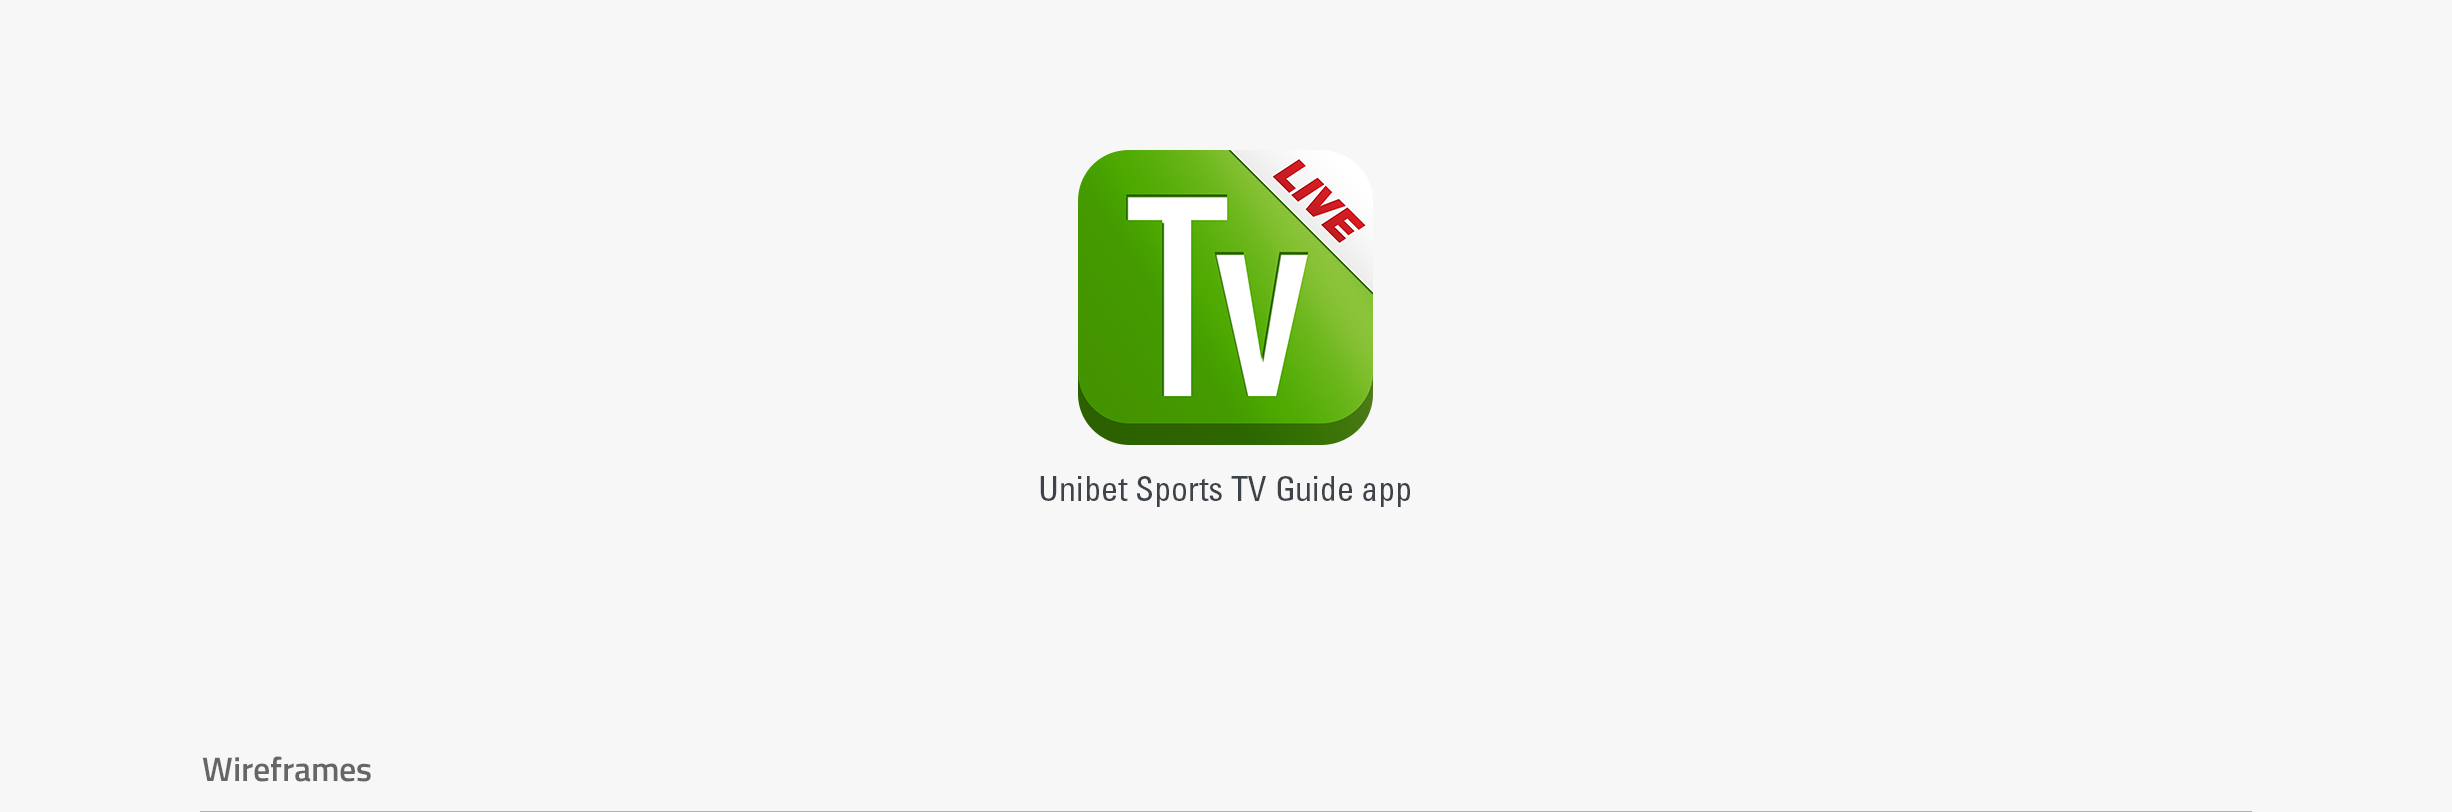 Unibet Sports TV guide app - app icon